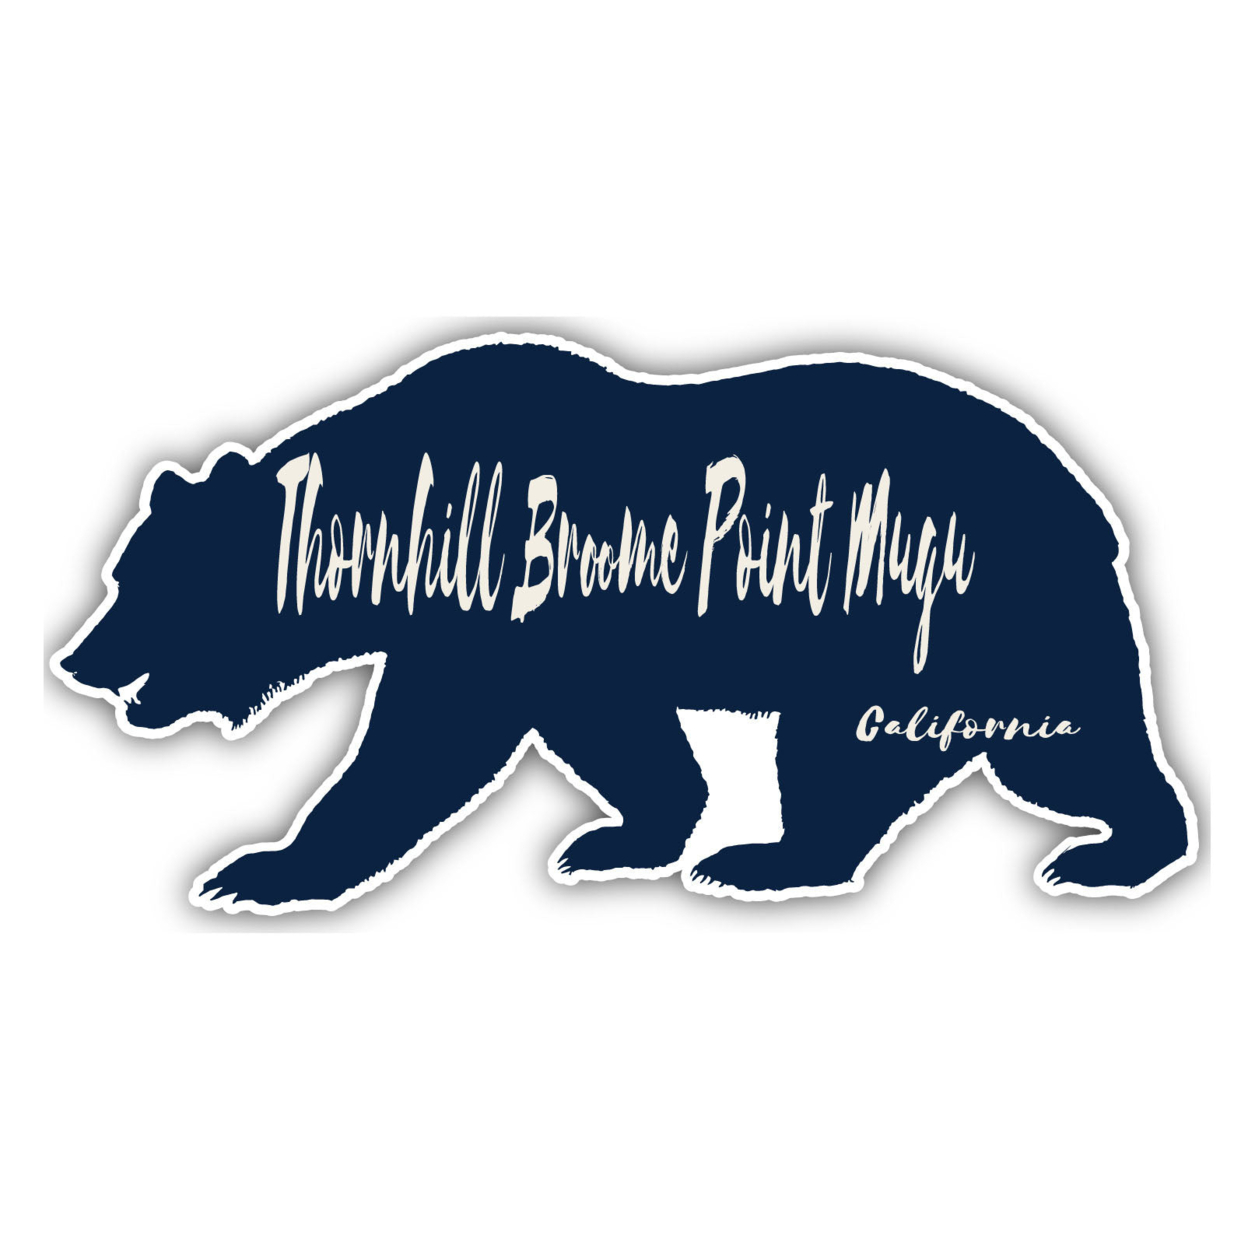 Thornhill Broome Point Mugu California Souvenir Decorative Stickers (Choose Theme And Size) - Single Unit, 4-Inch, Bear